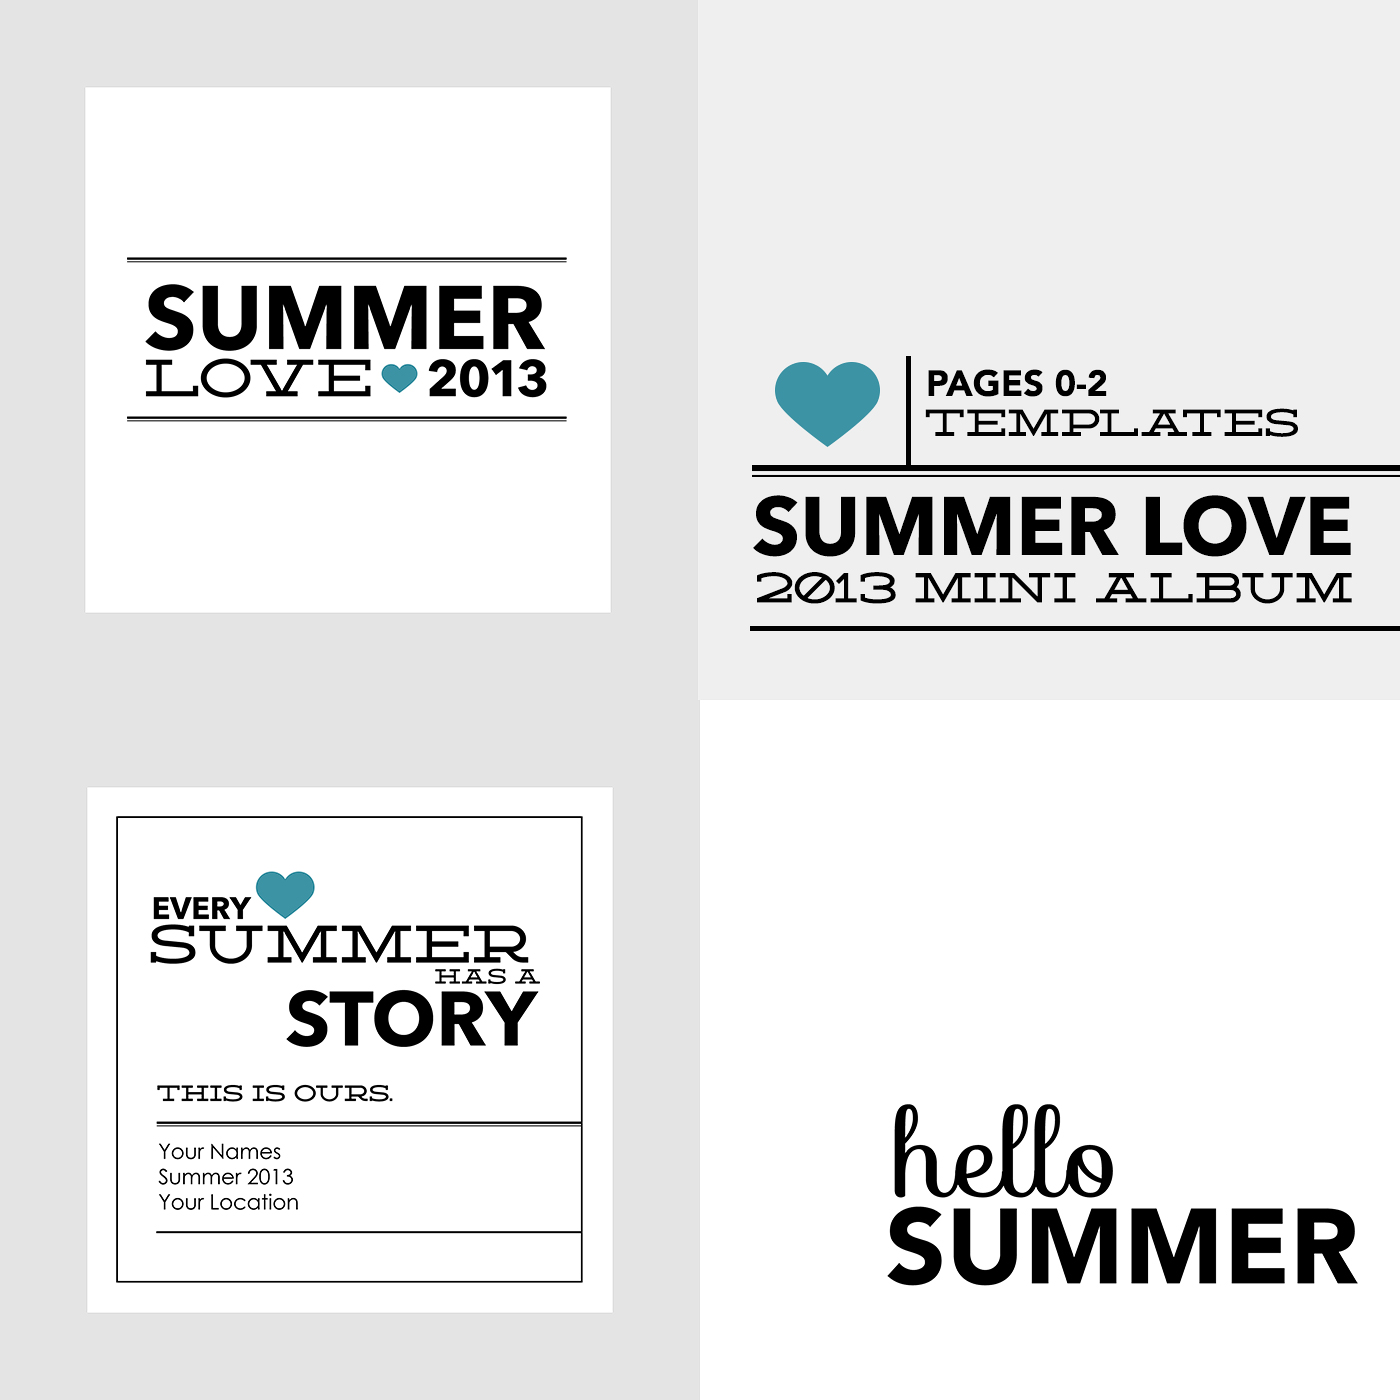 nettiodesigns_SummerLove-pg0-2-Templates